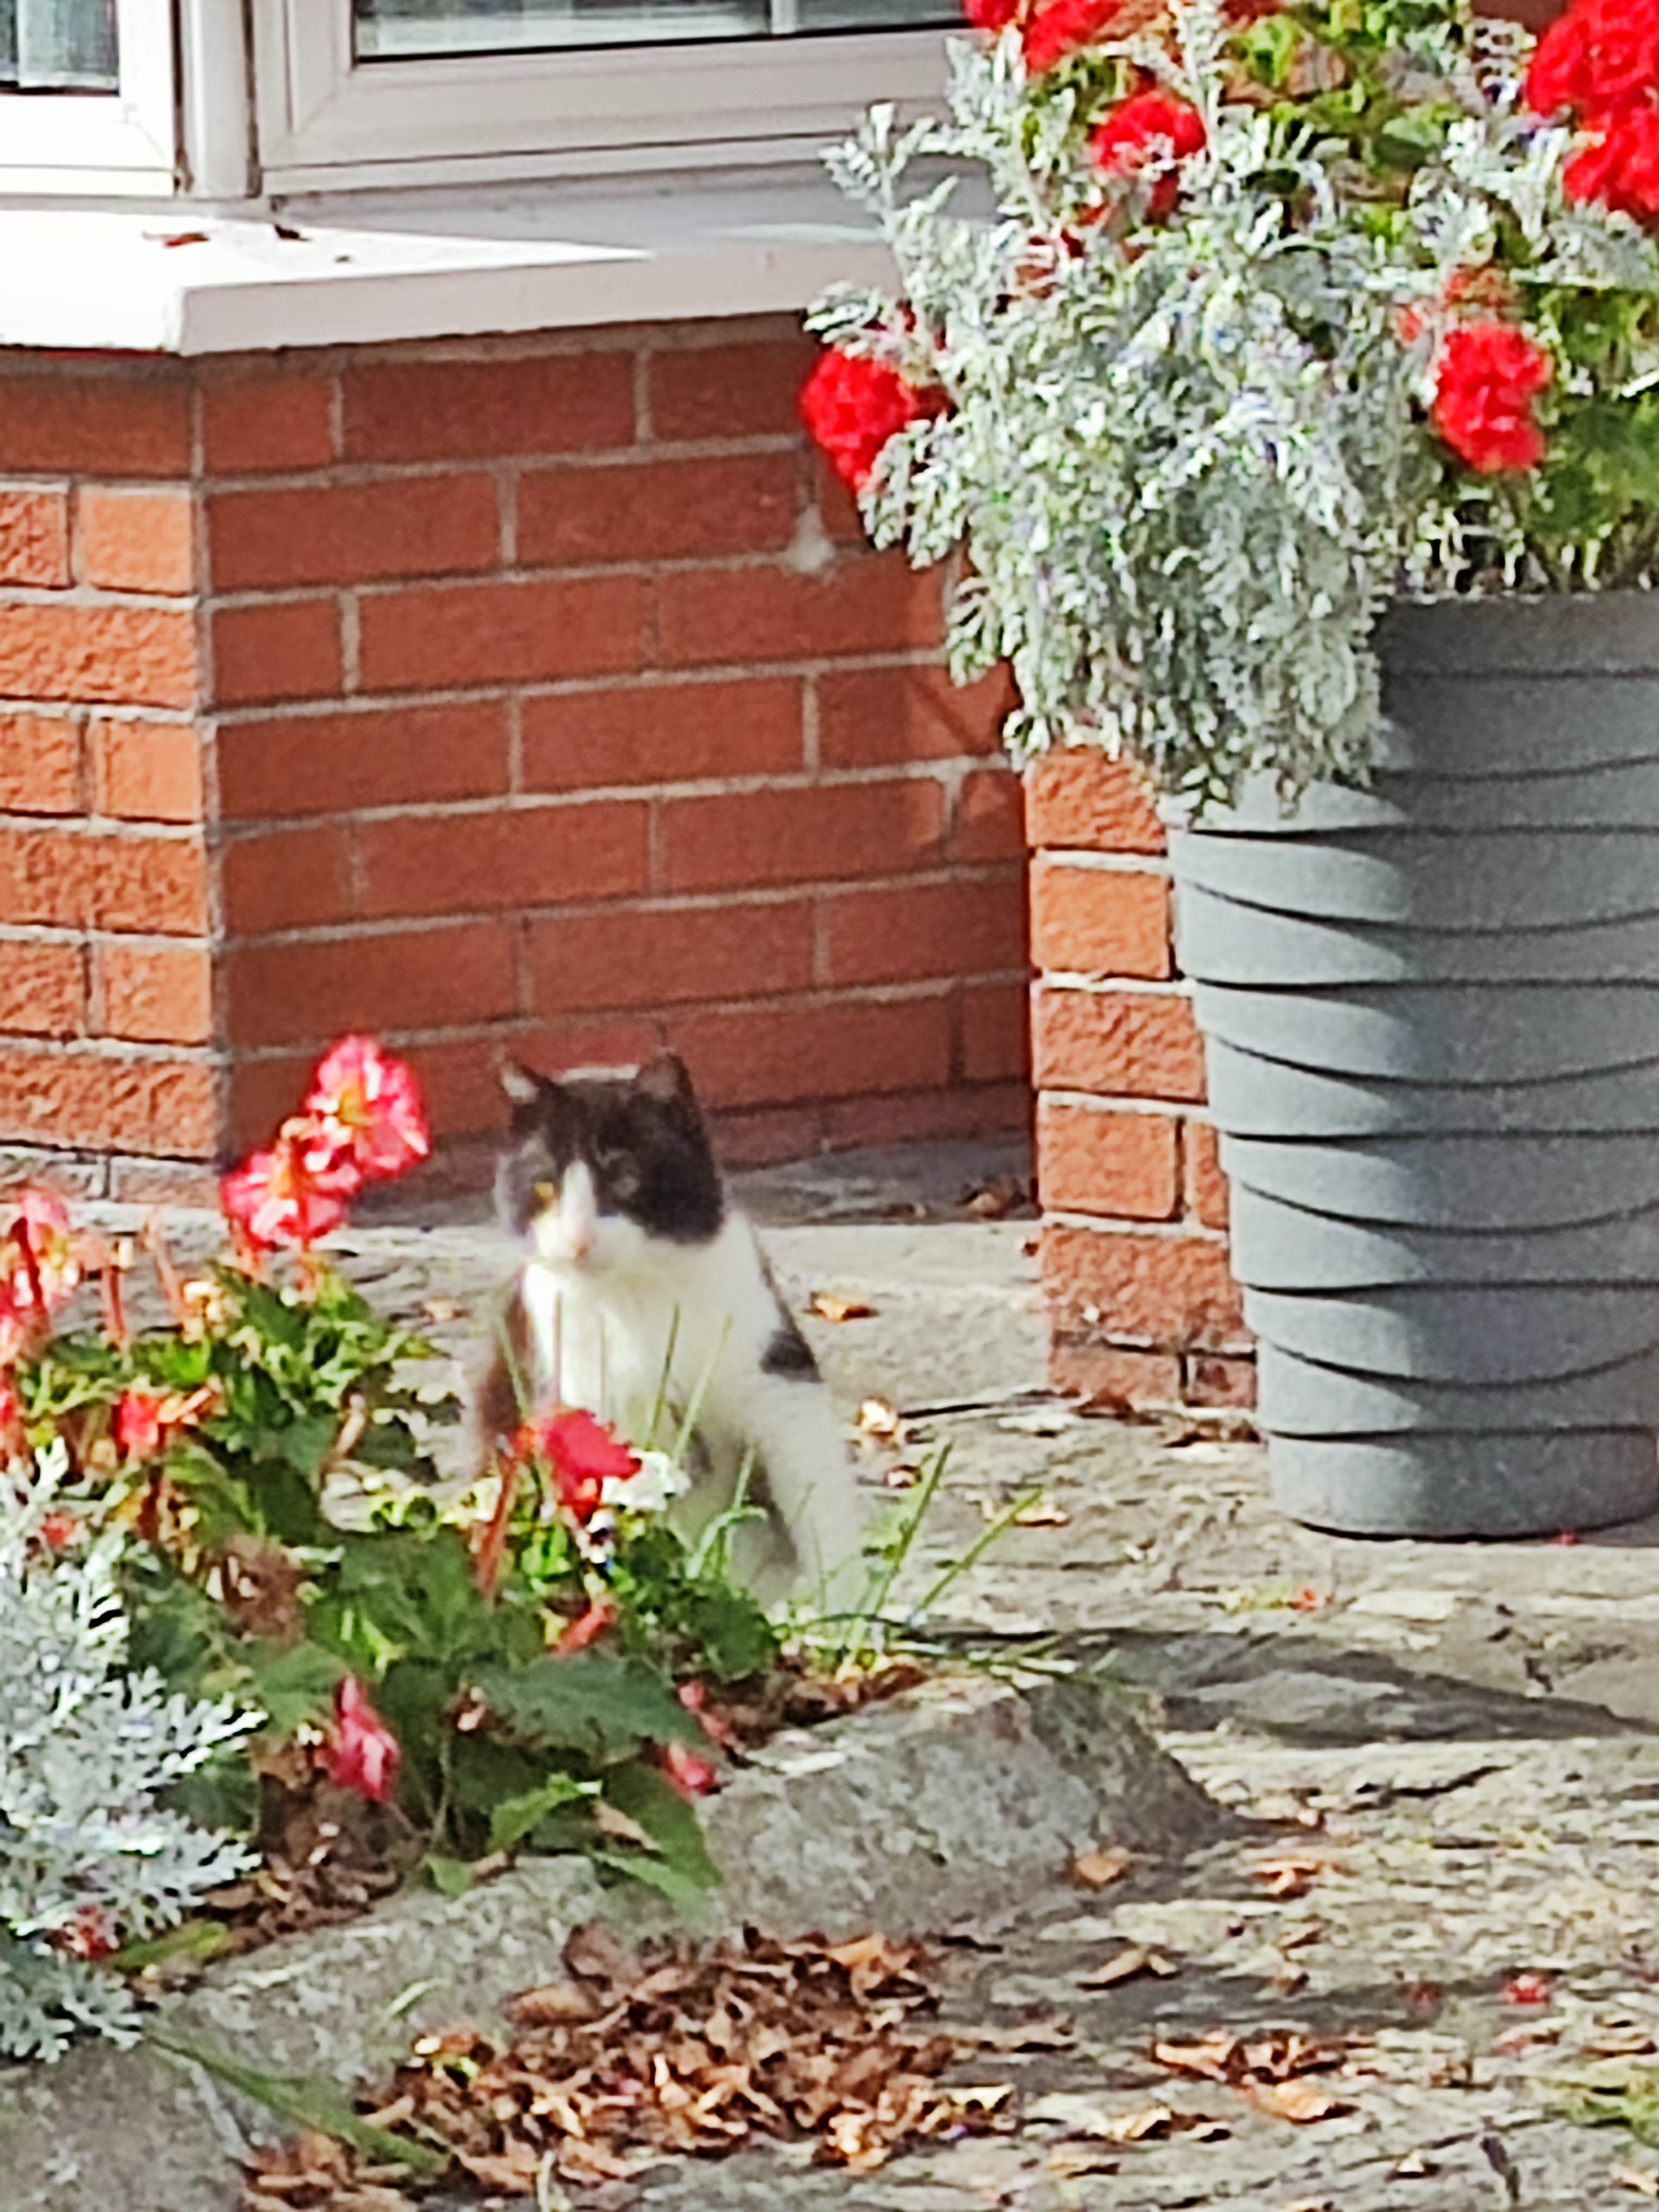 Cat peeking over the flowers